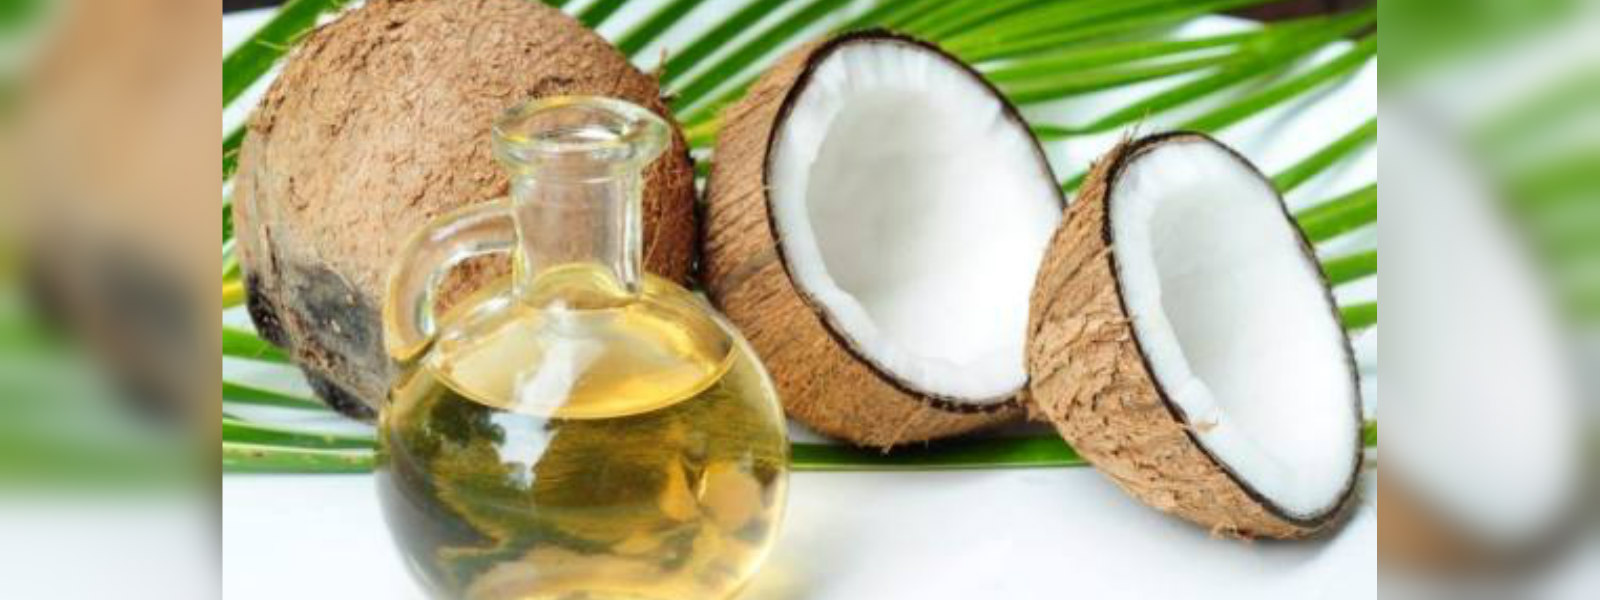 Coconut oil: 30% of SL's demand produced locally